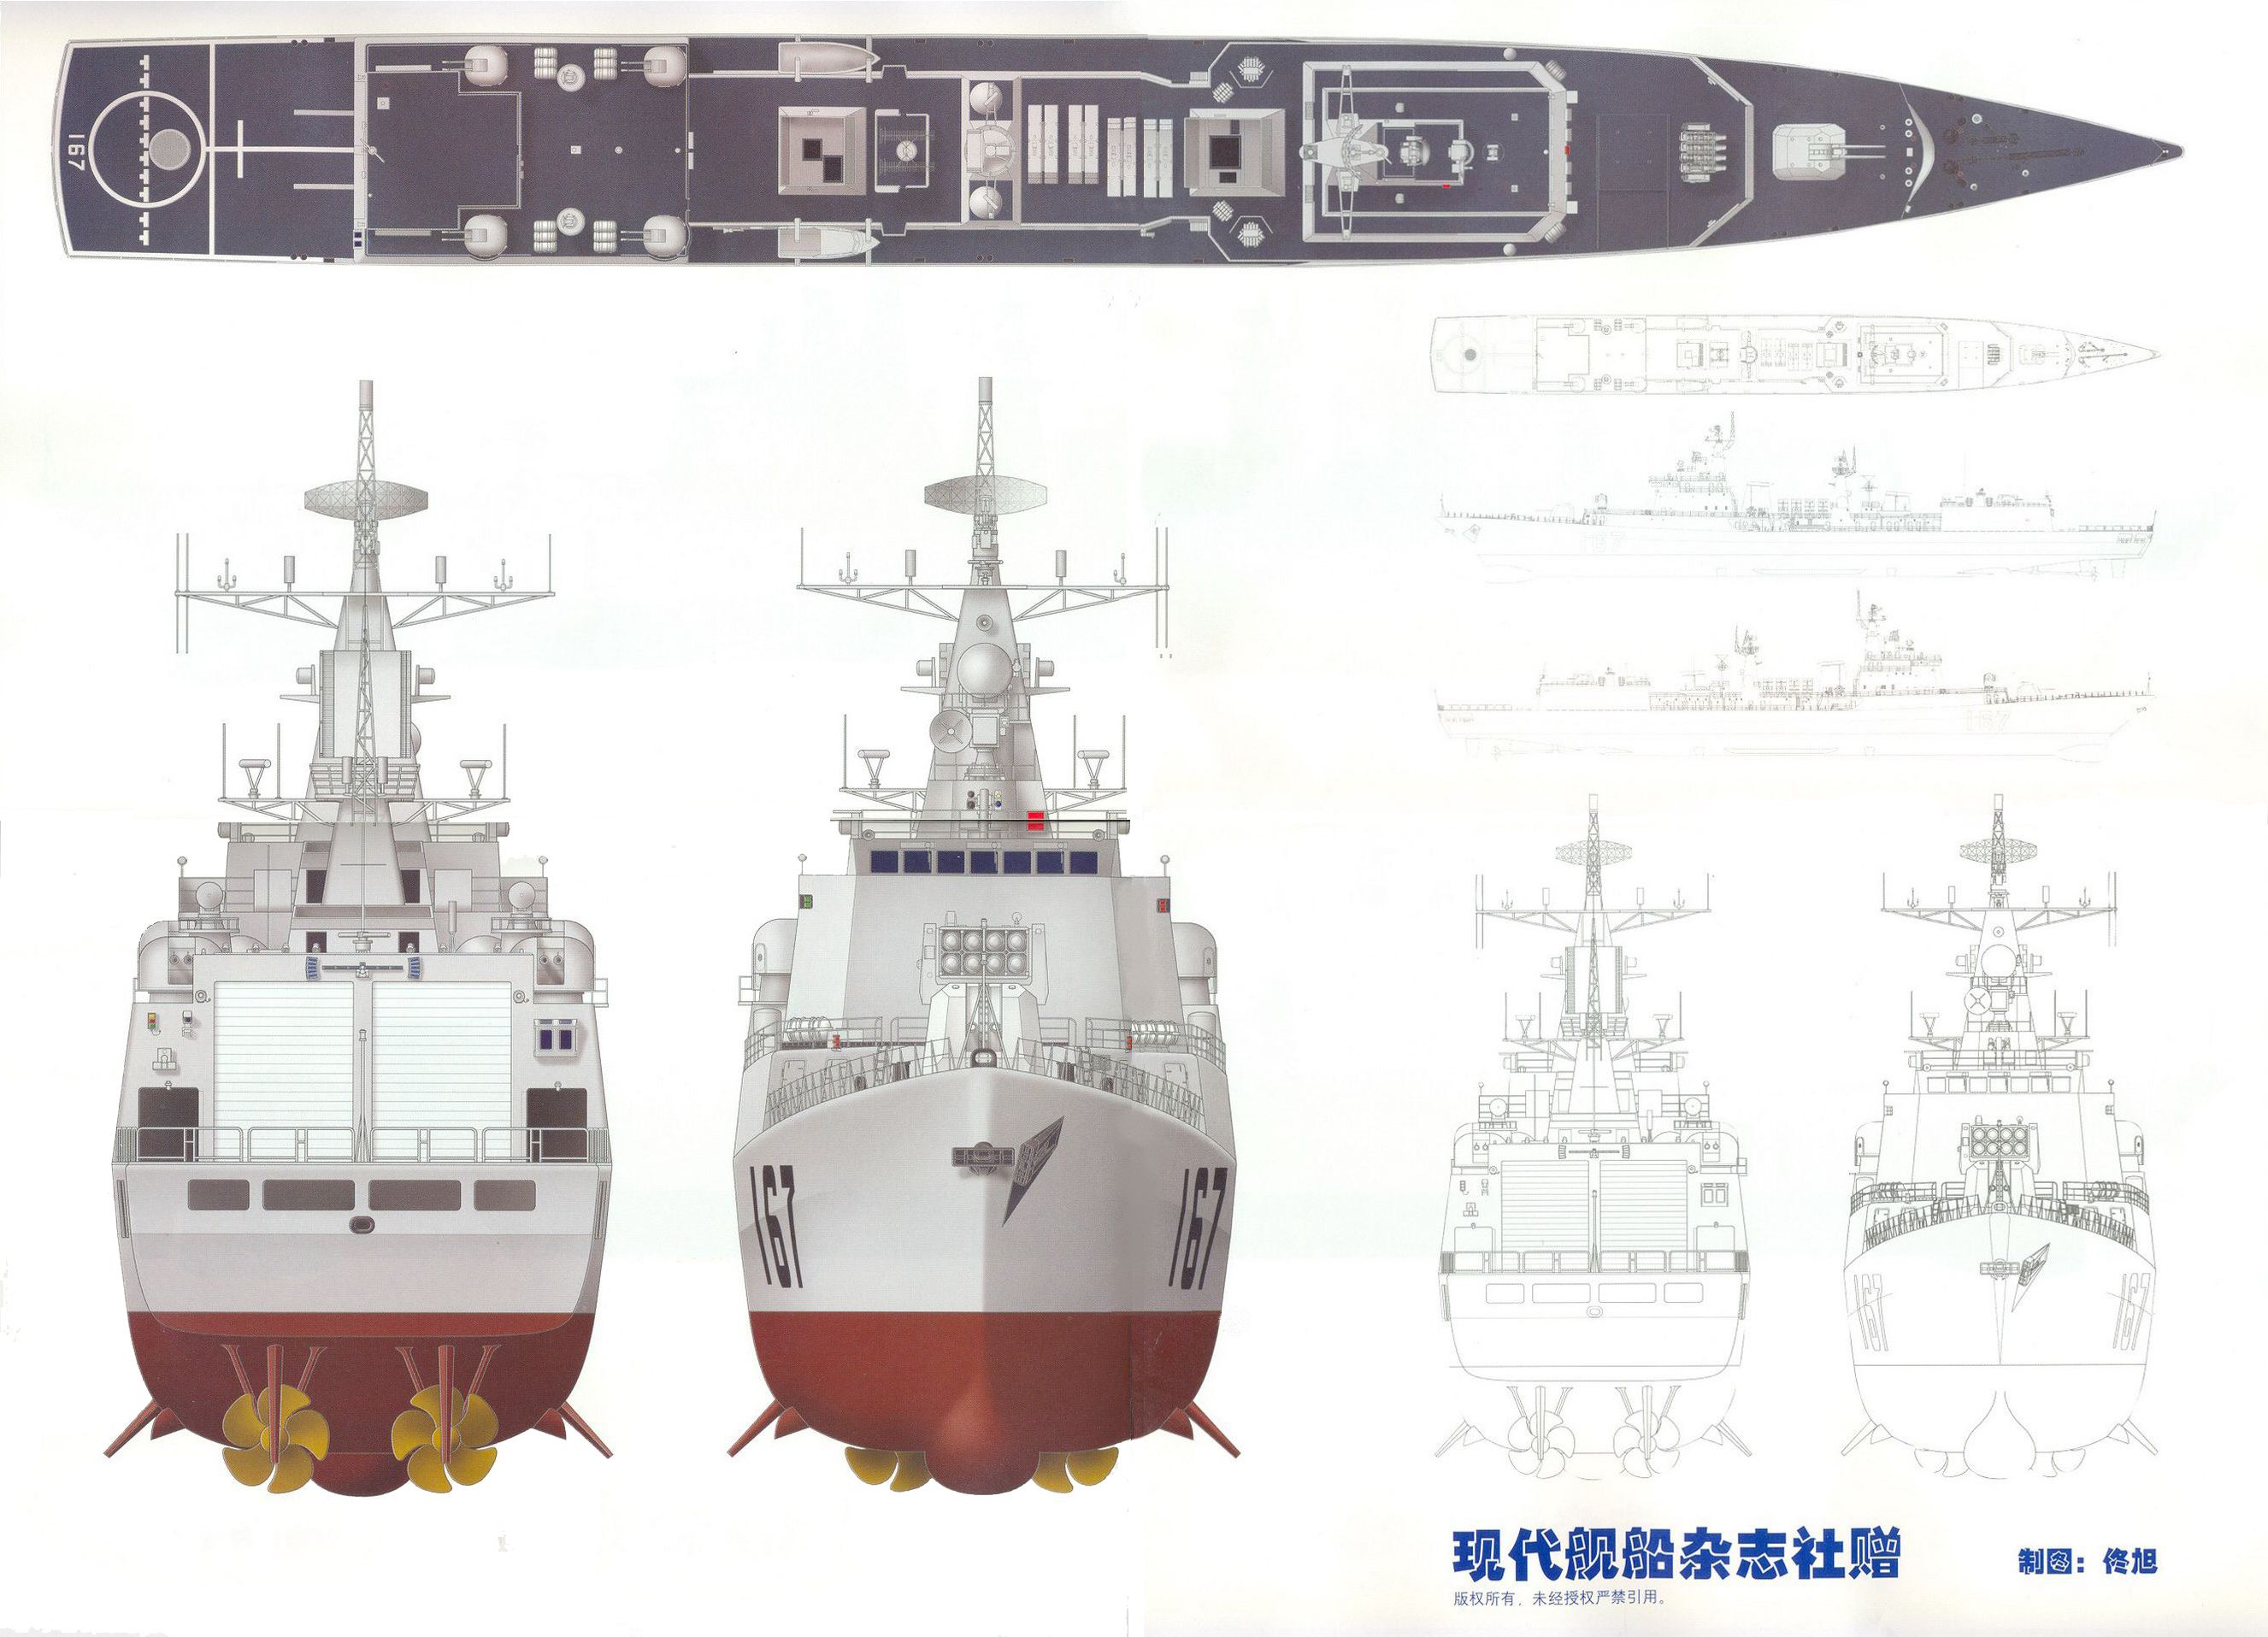 1706455452 707 Type 052B or Guangzhou Class Destroyer